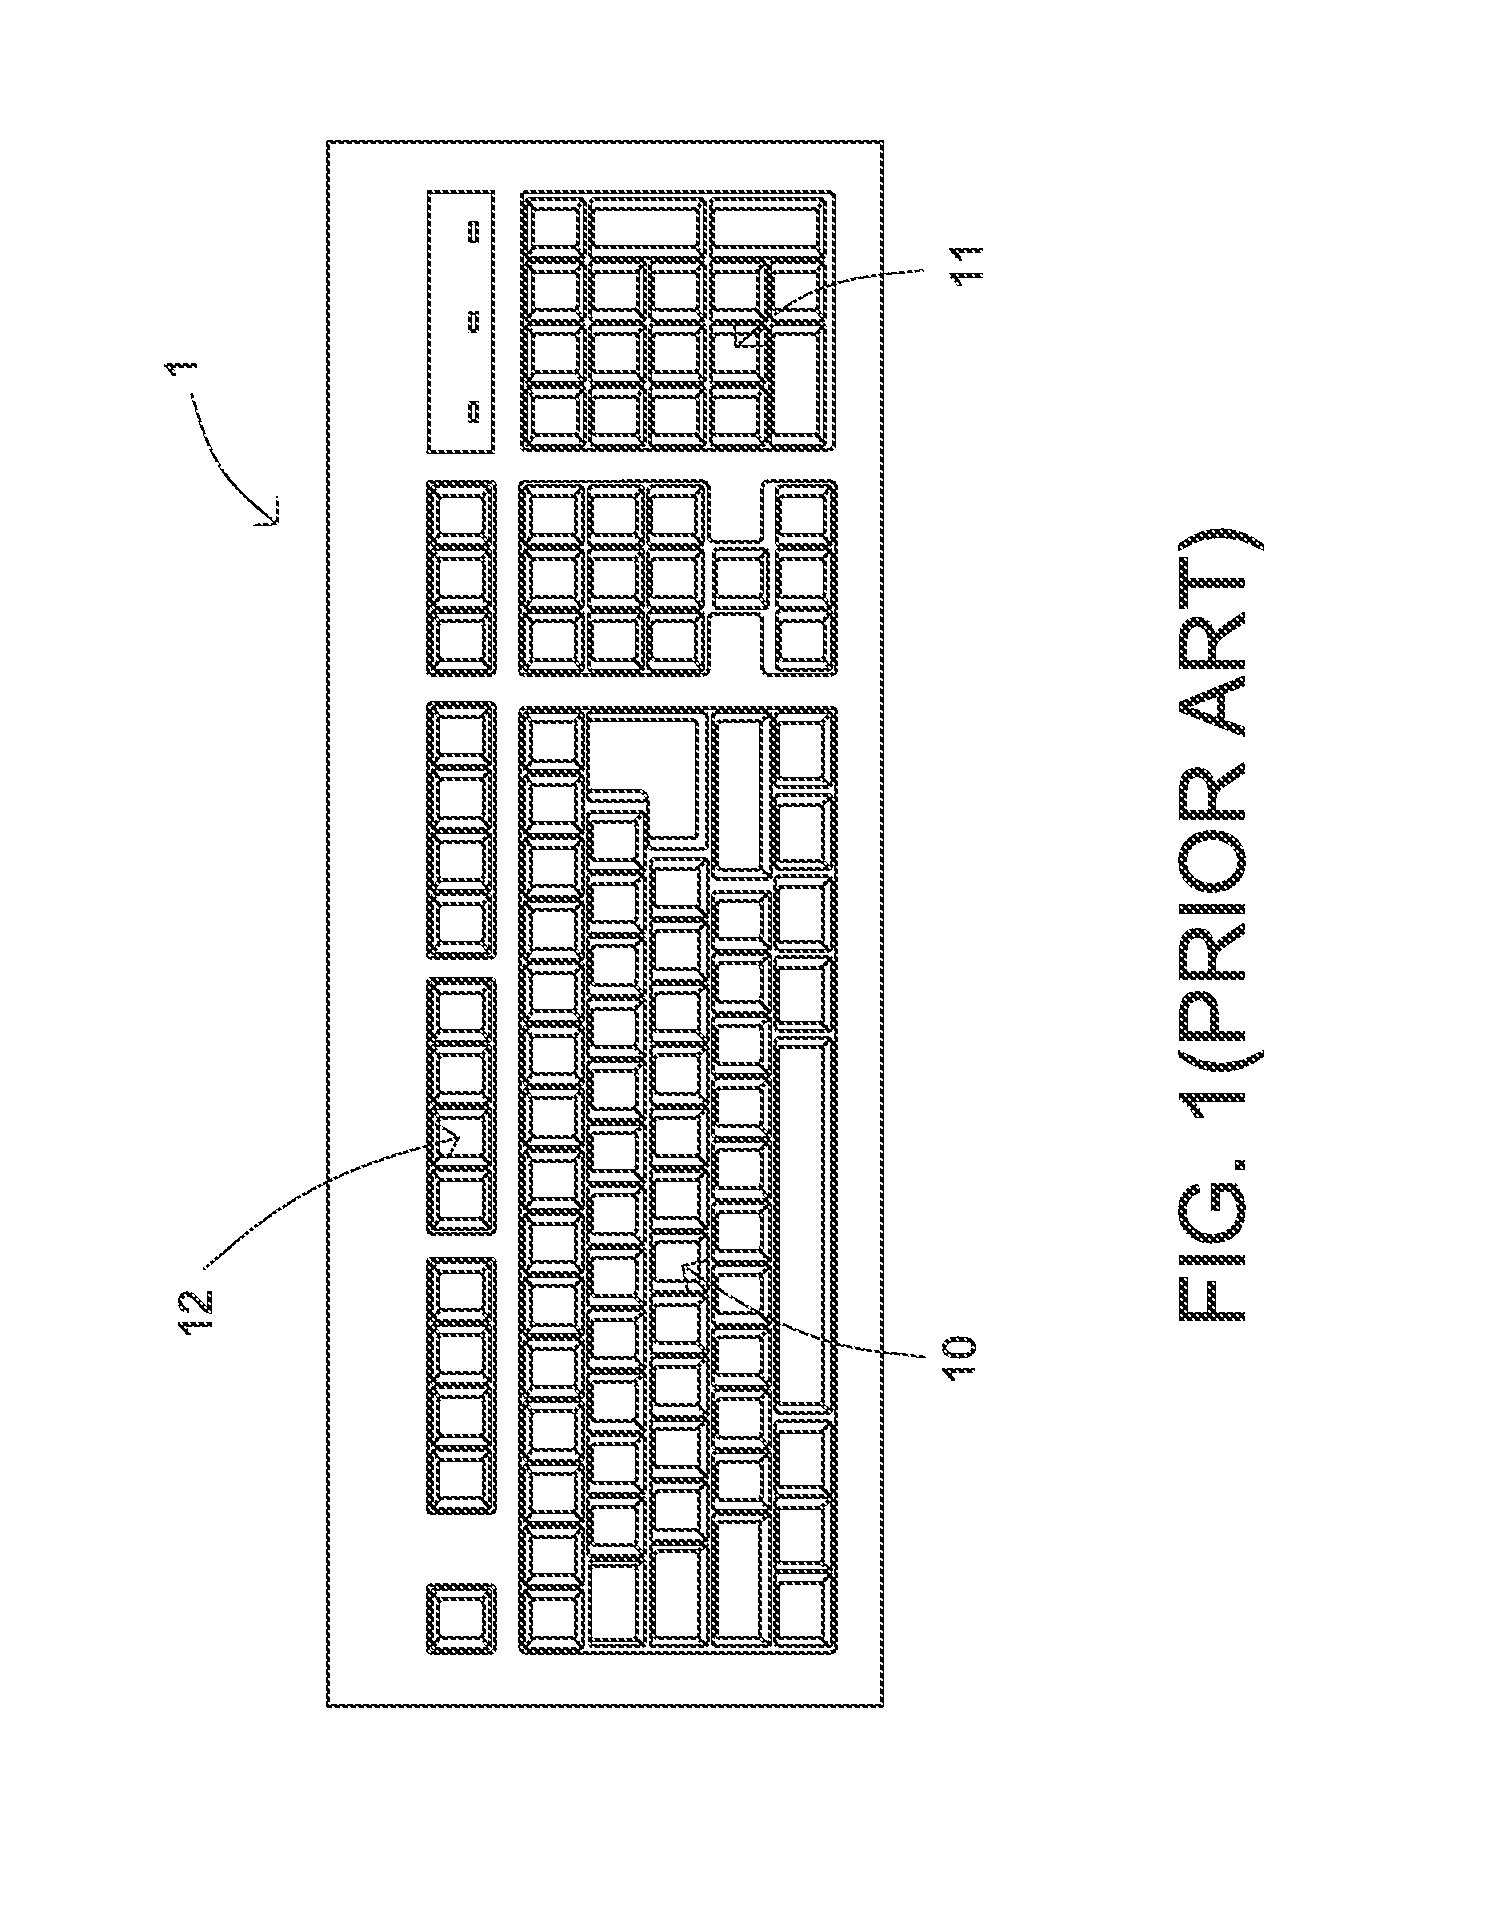 Two-level pressure sensitive keyboard